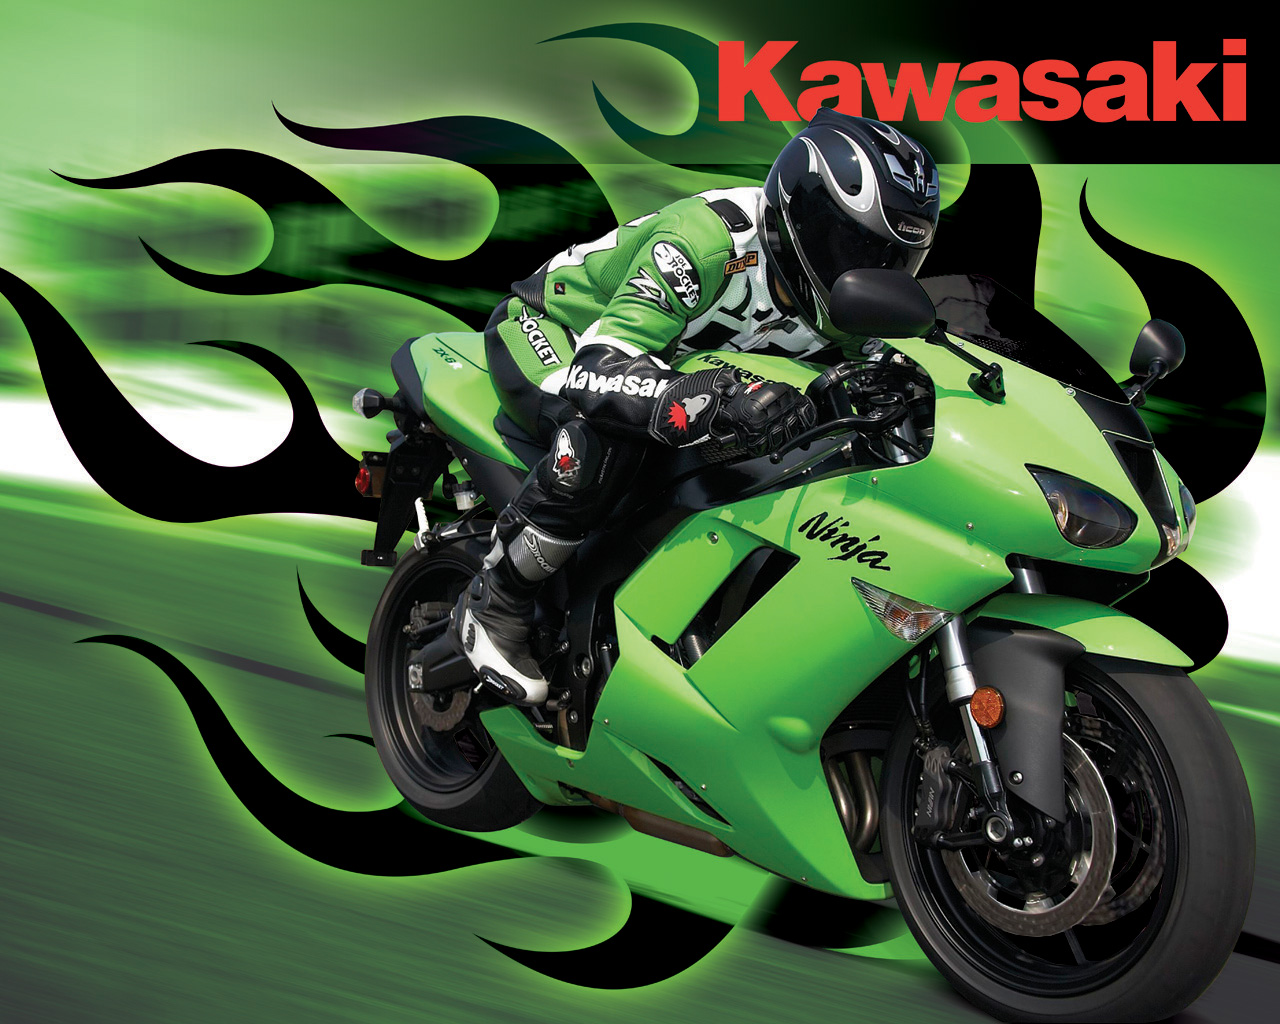 Download Kawasaki Ninja Wallpaper 1280x1024 | Full HD Wallpapers